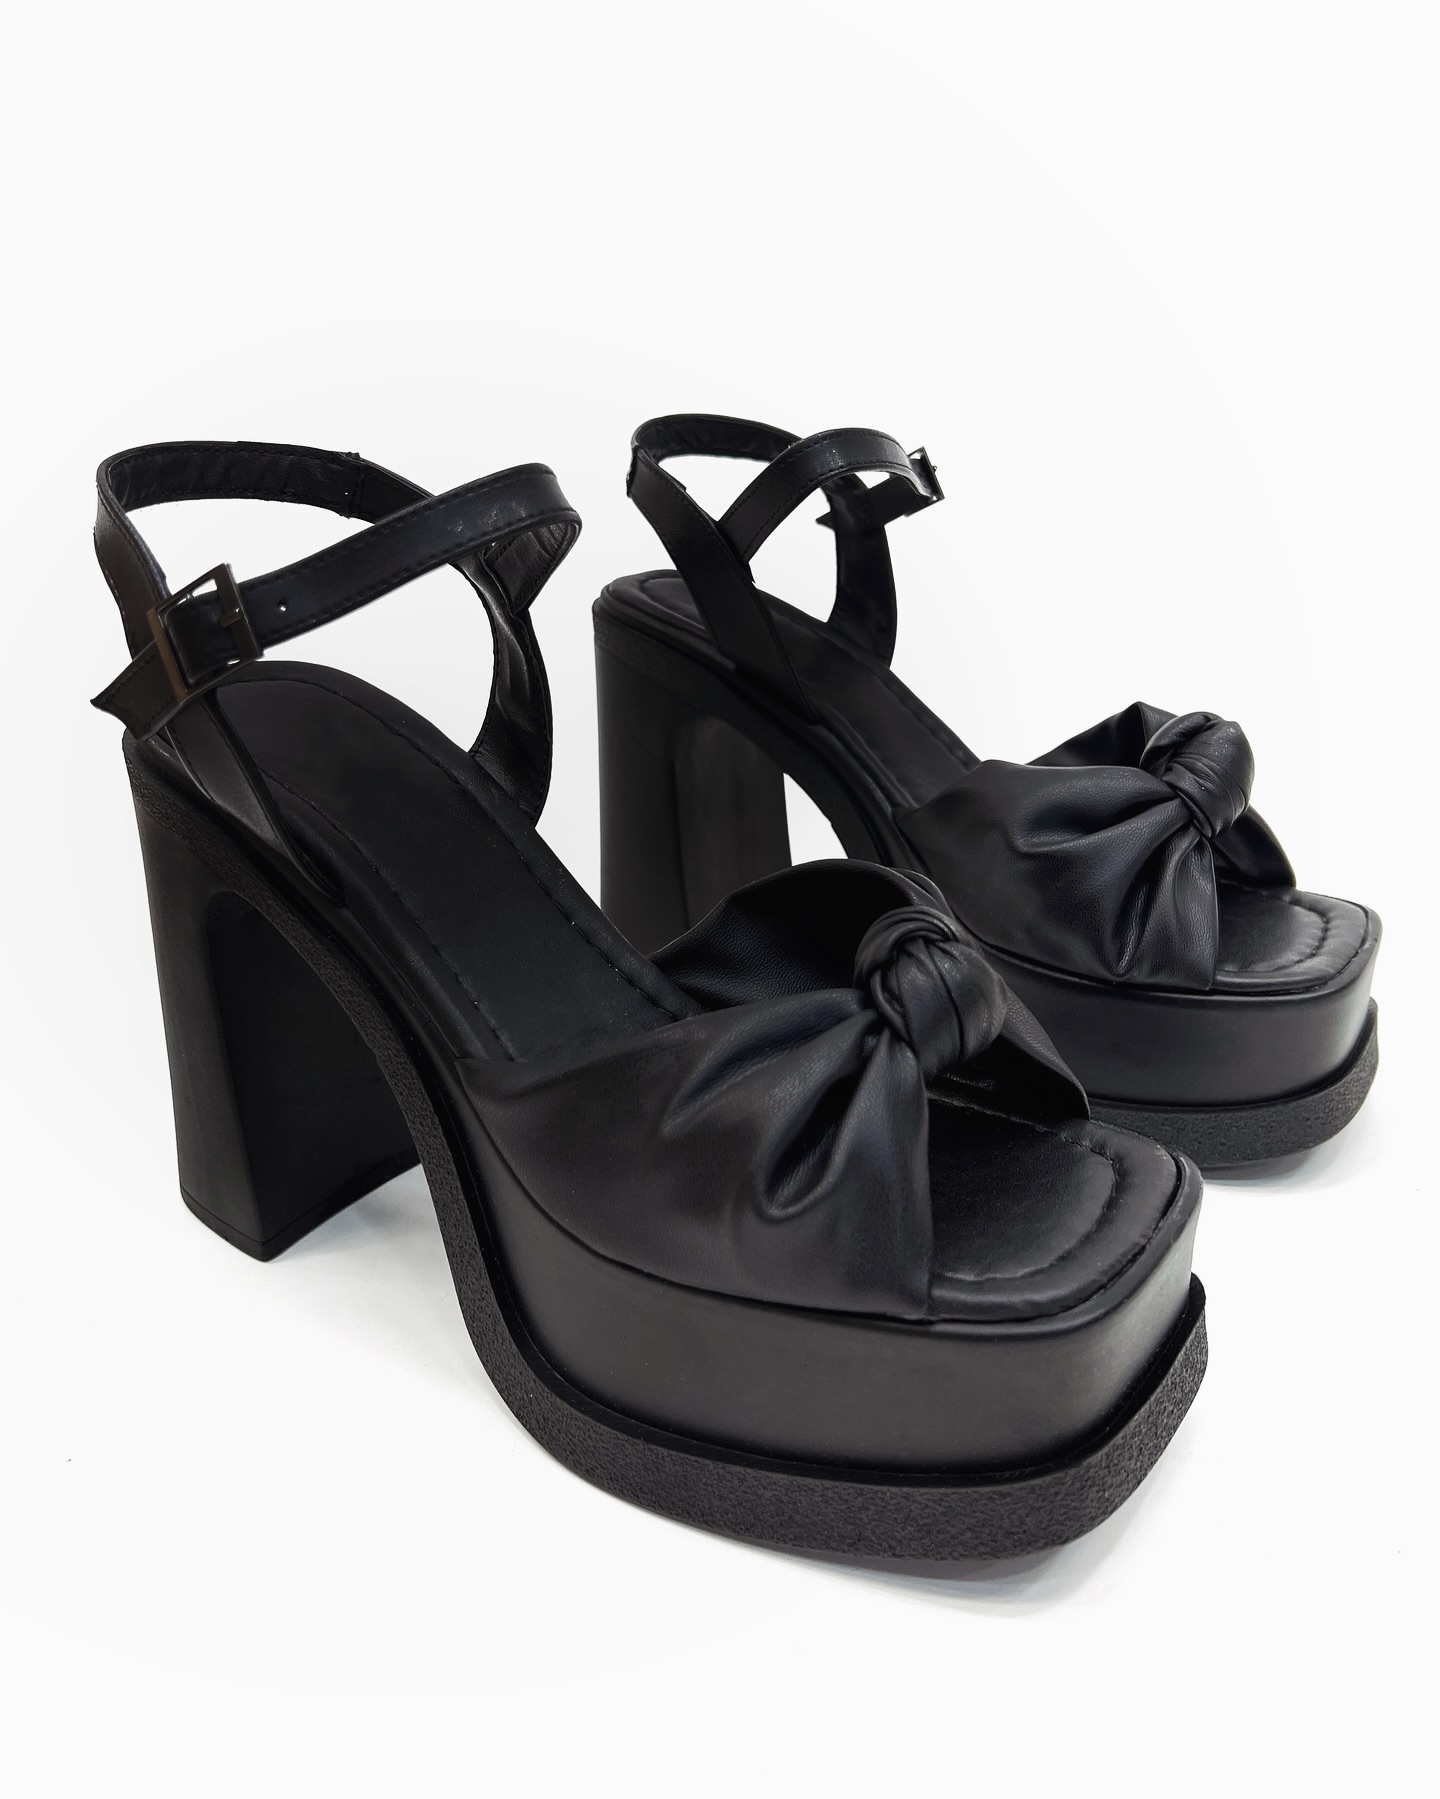 Women sandals E354 - BLACK